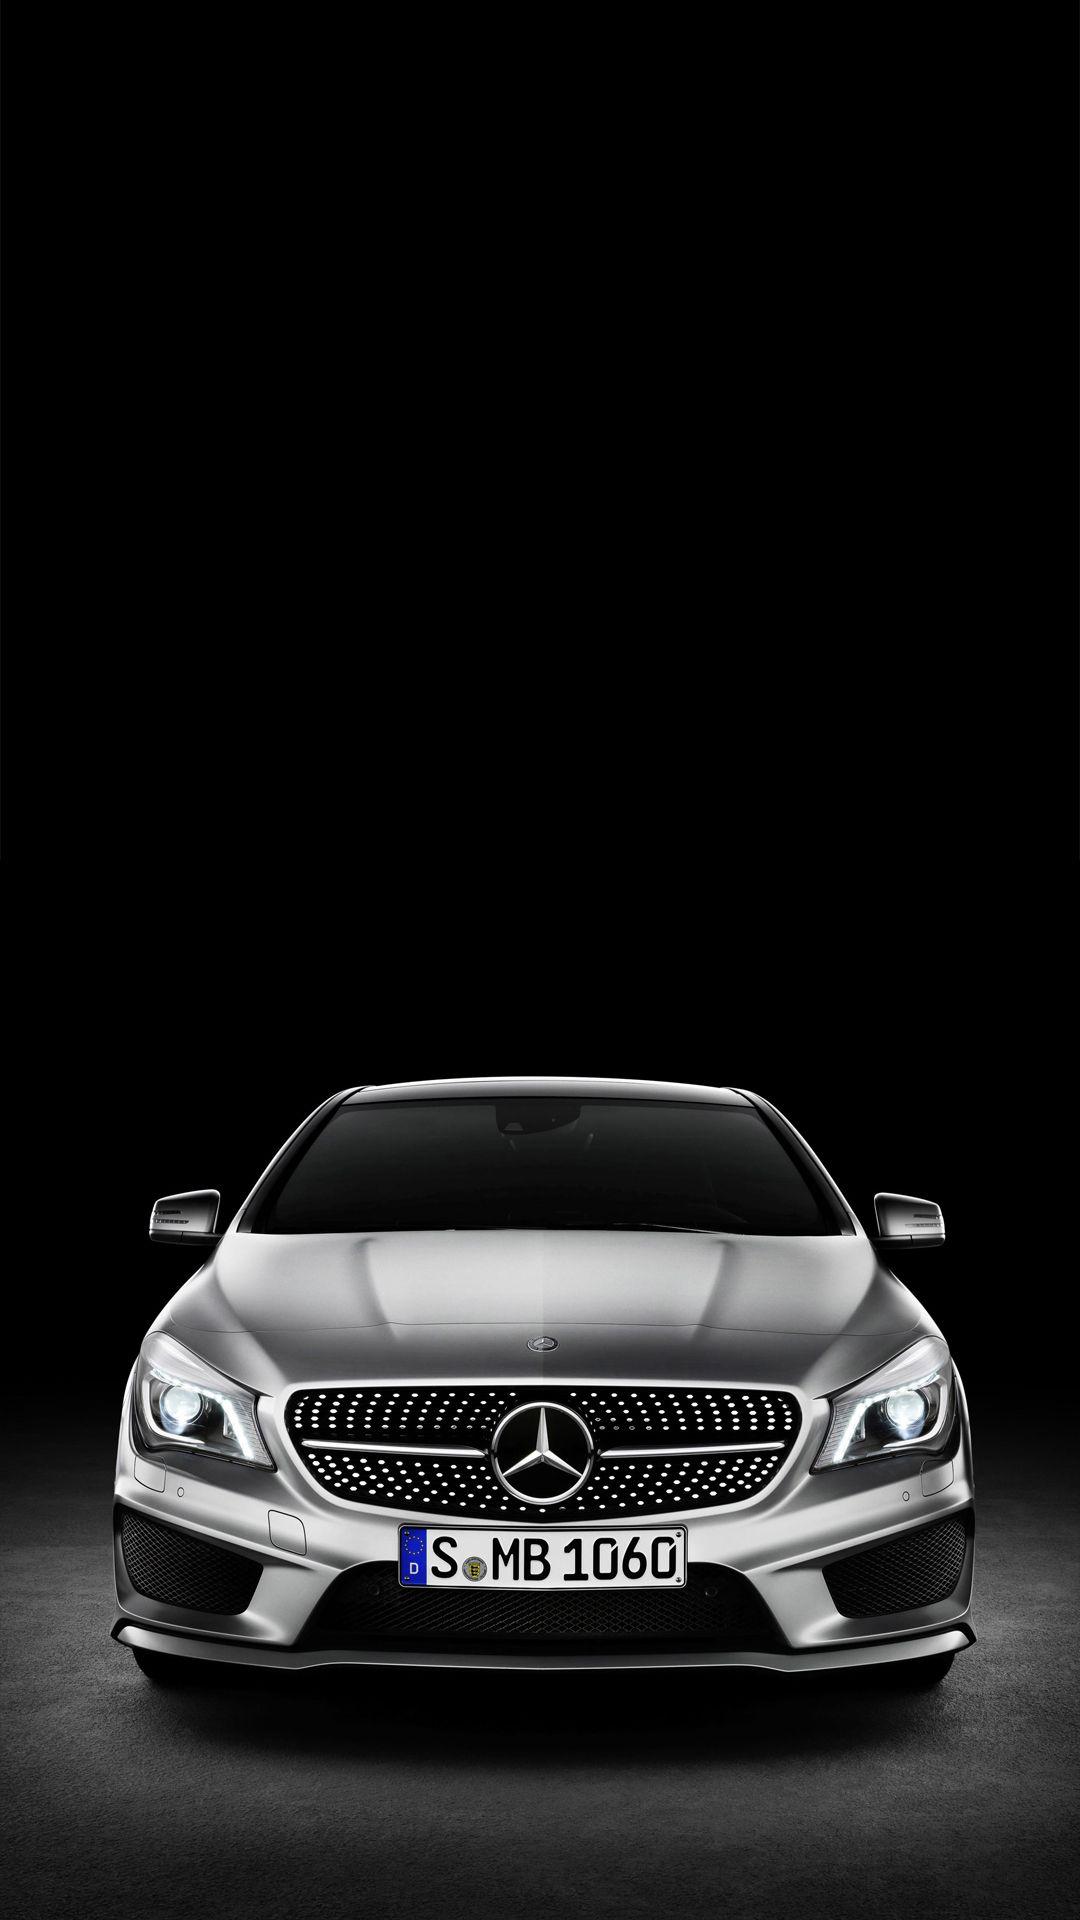 Mercedes Benz Htc Wallpaper Free Mercedes Benz Htc Background